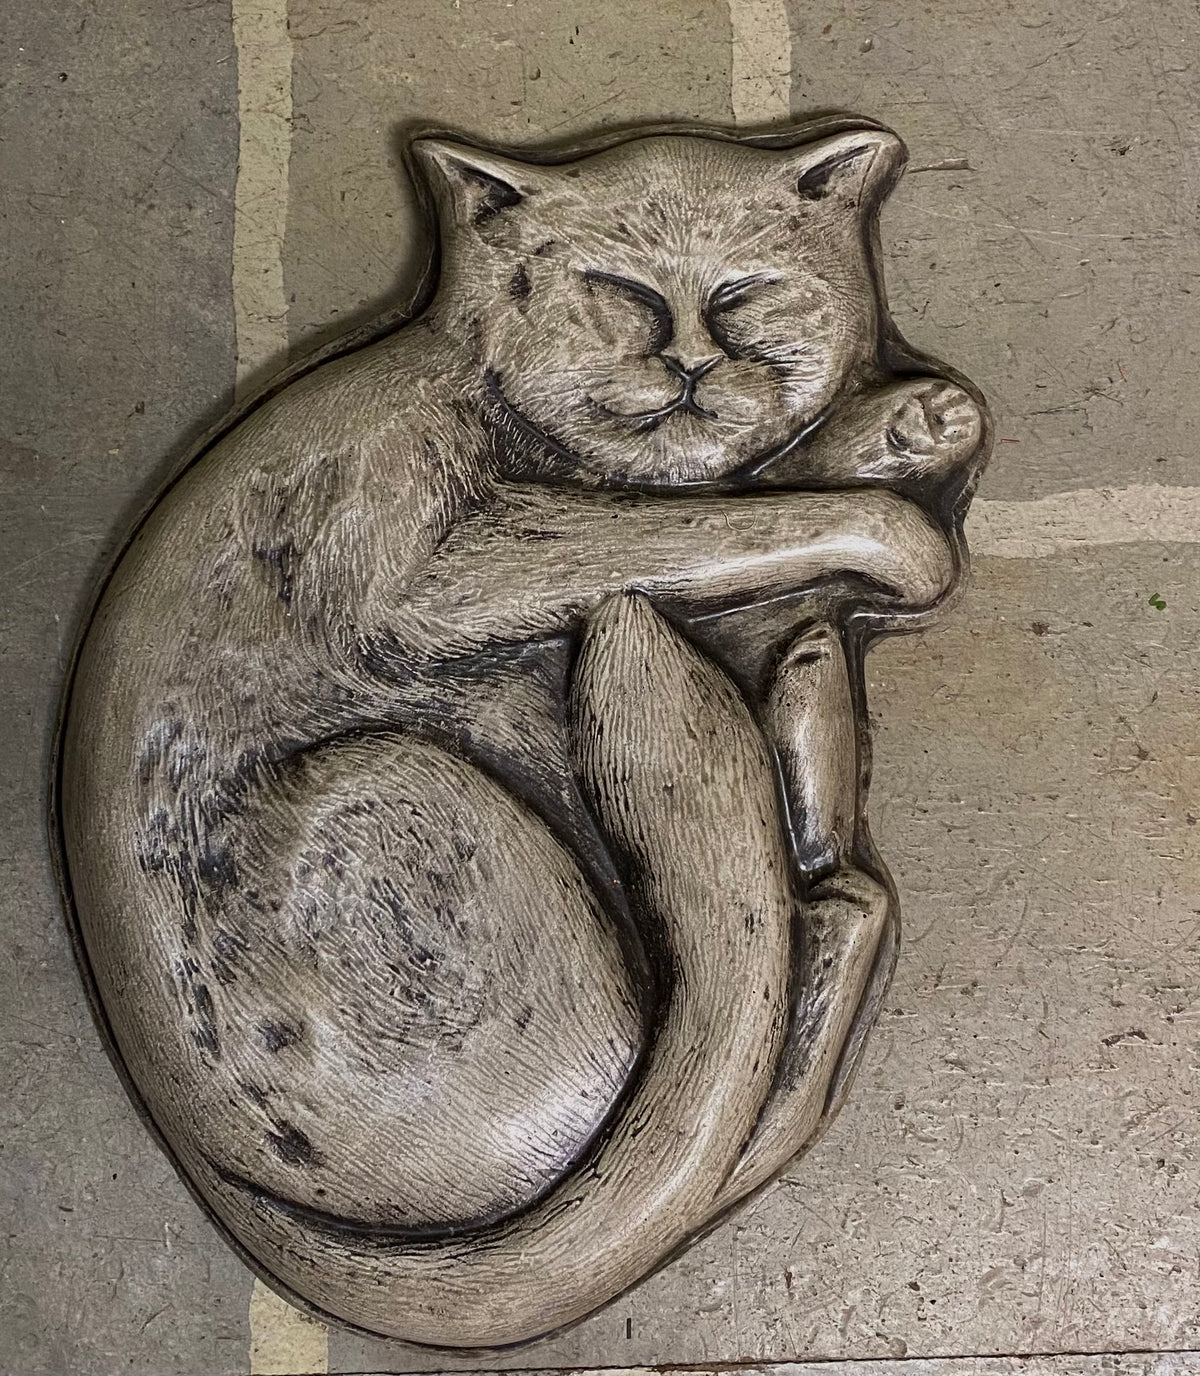 The Sleeping Cat Garden Stone